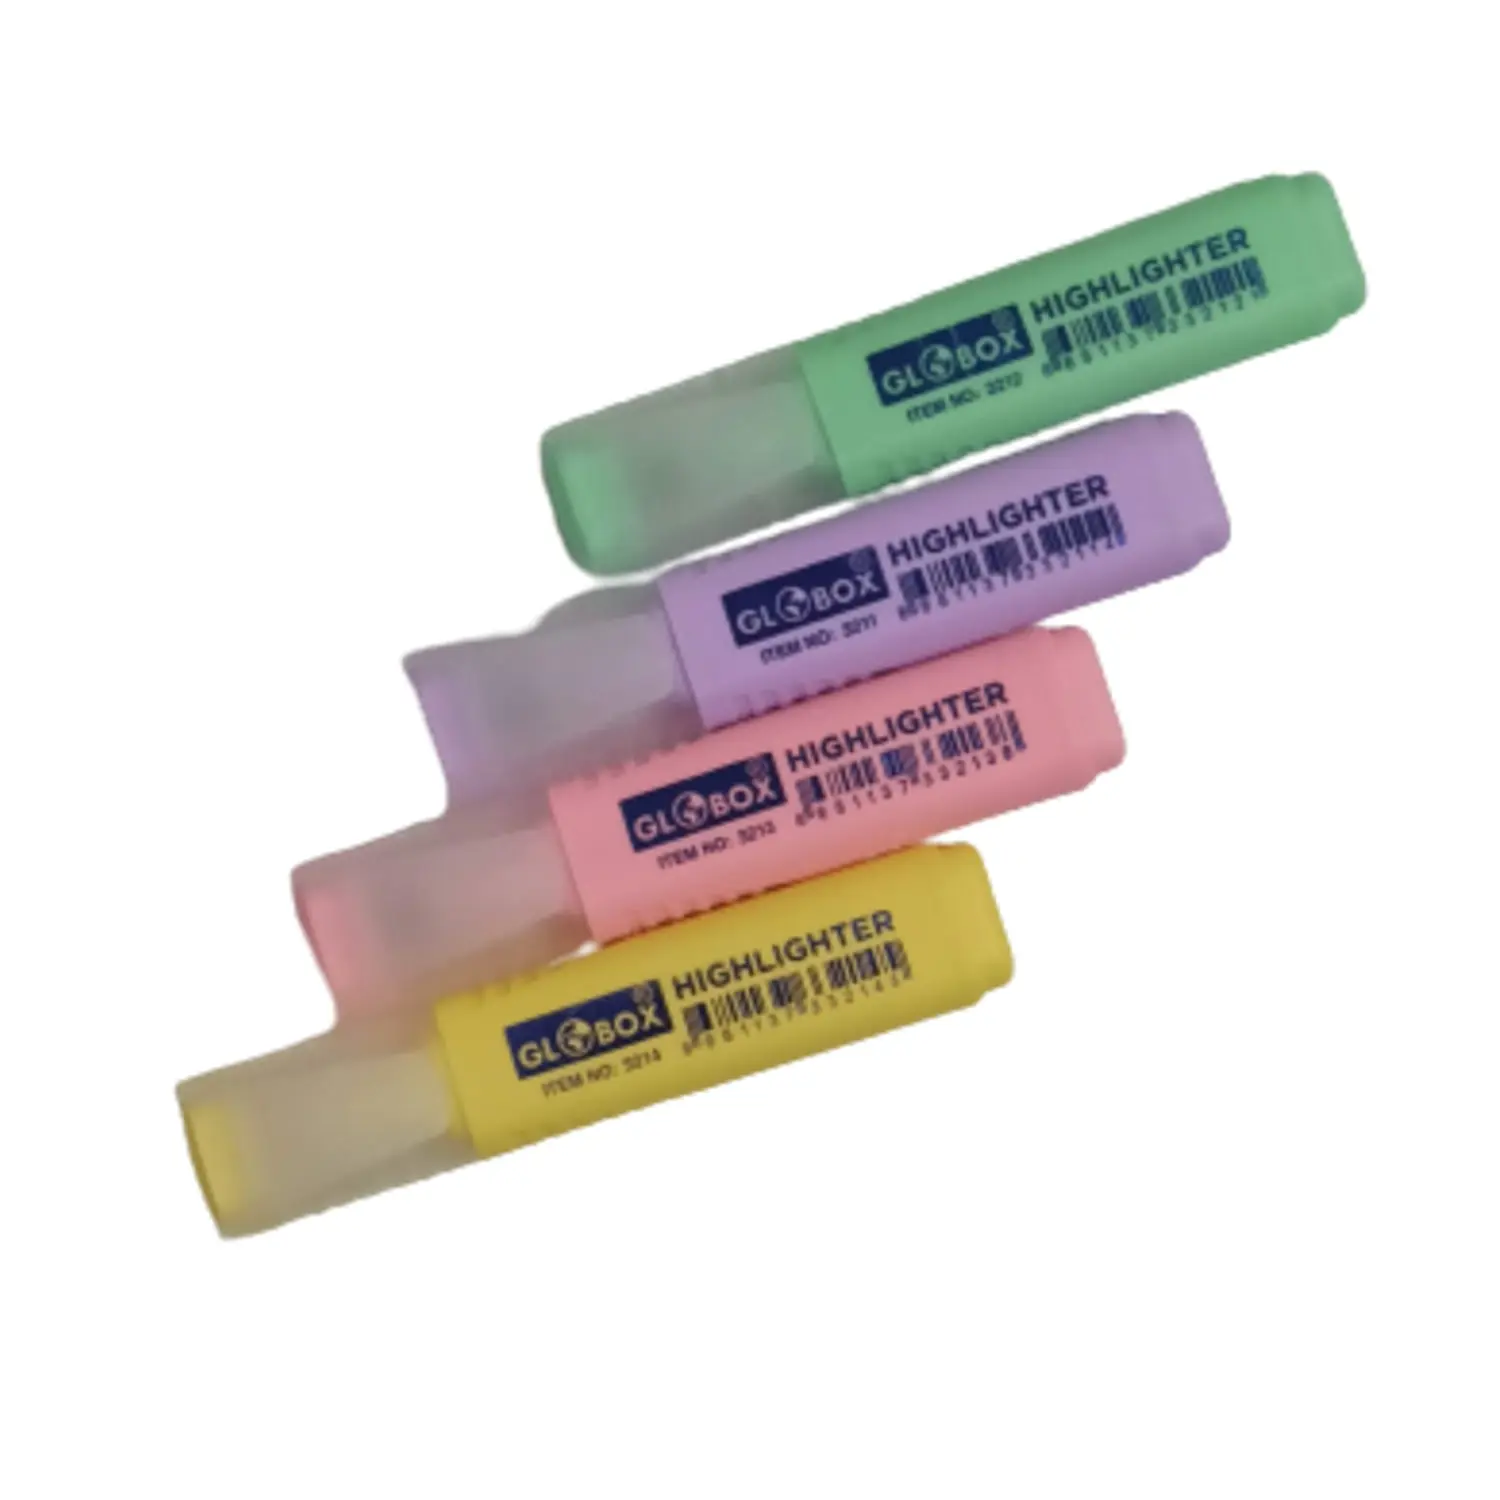 Globox Highlighter 4 color Green/Pink/Yellow/Lilac İşaretmele Pen 2021  Trend High Quality Kurumayan End Technology vivid Colors - AliExpress